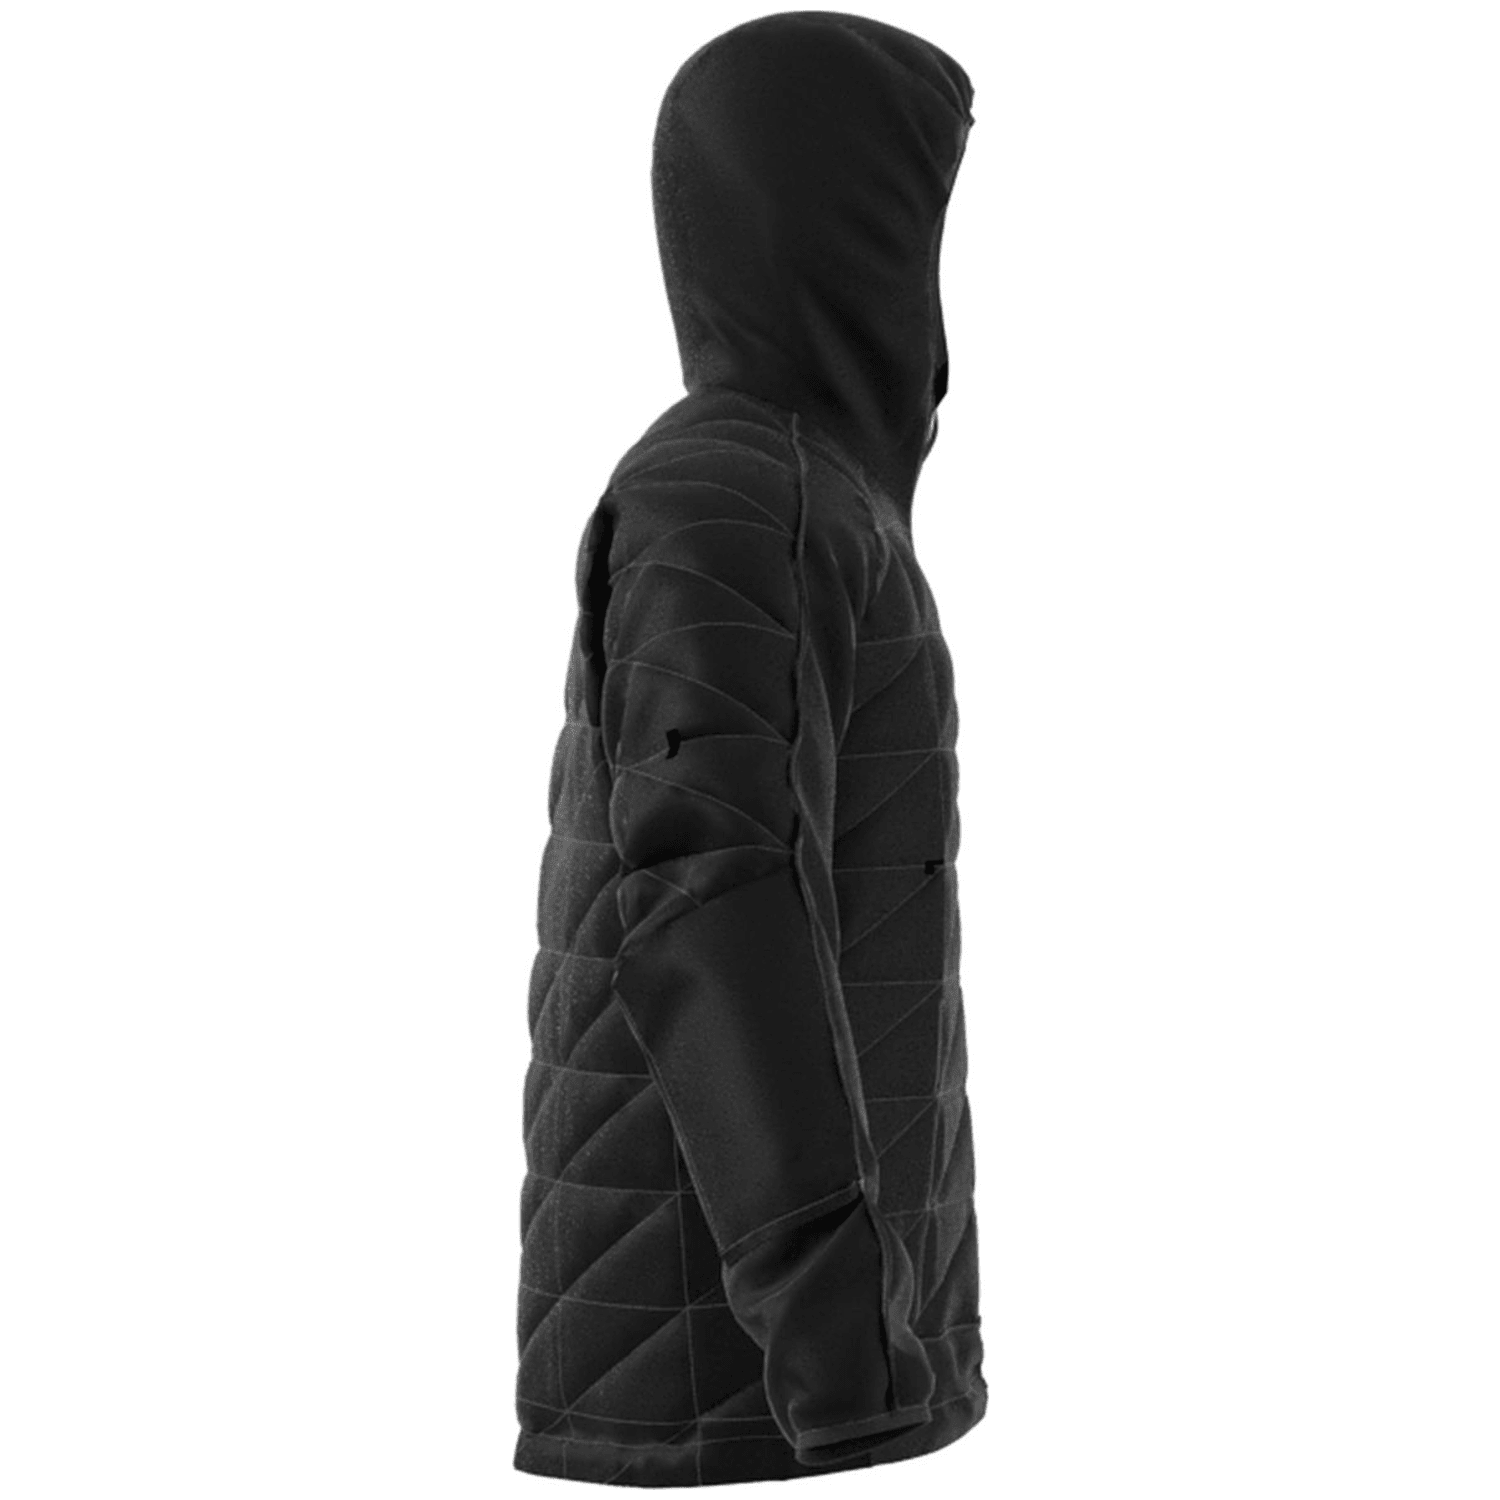 Adidas TERREX Multi Insulated Hooded Jacke Herren